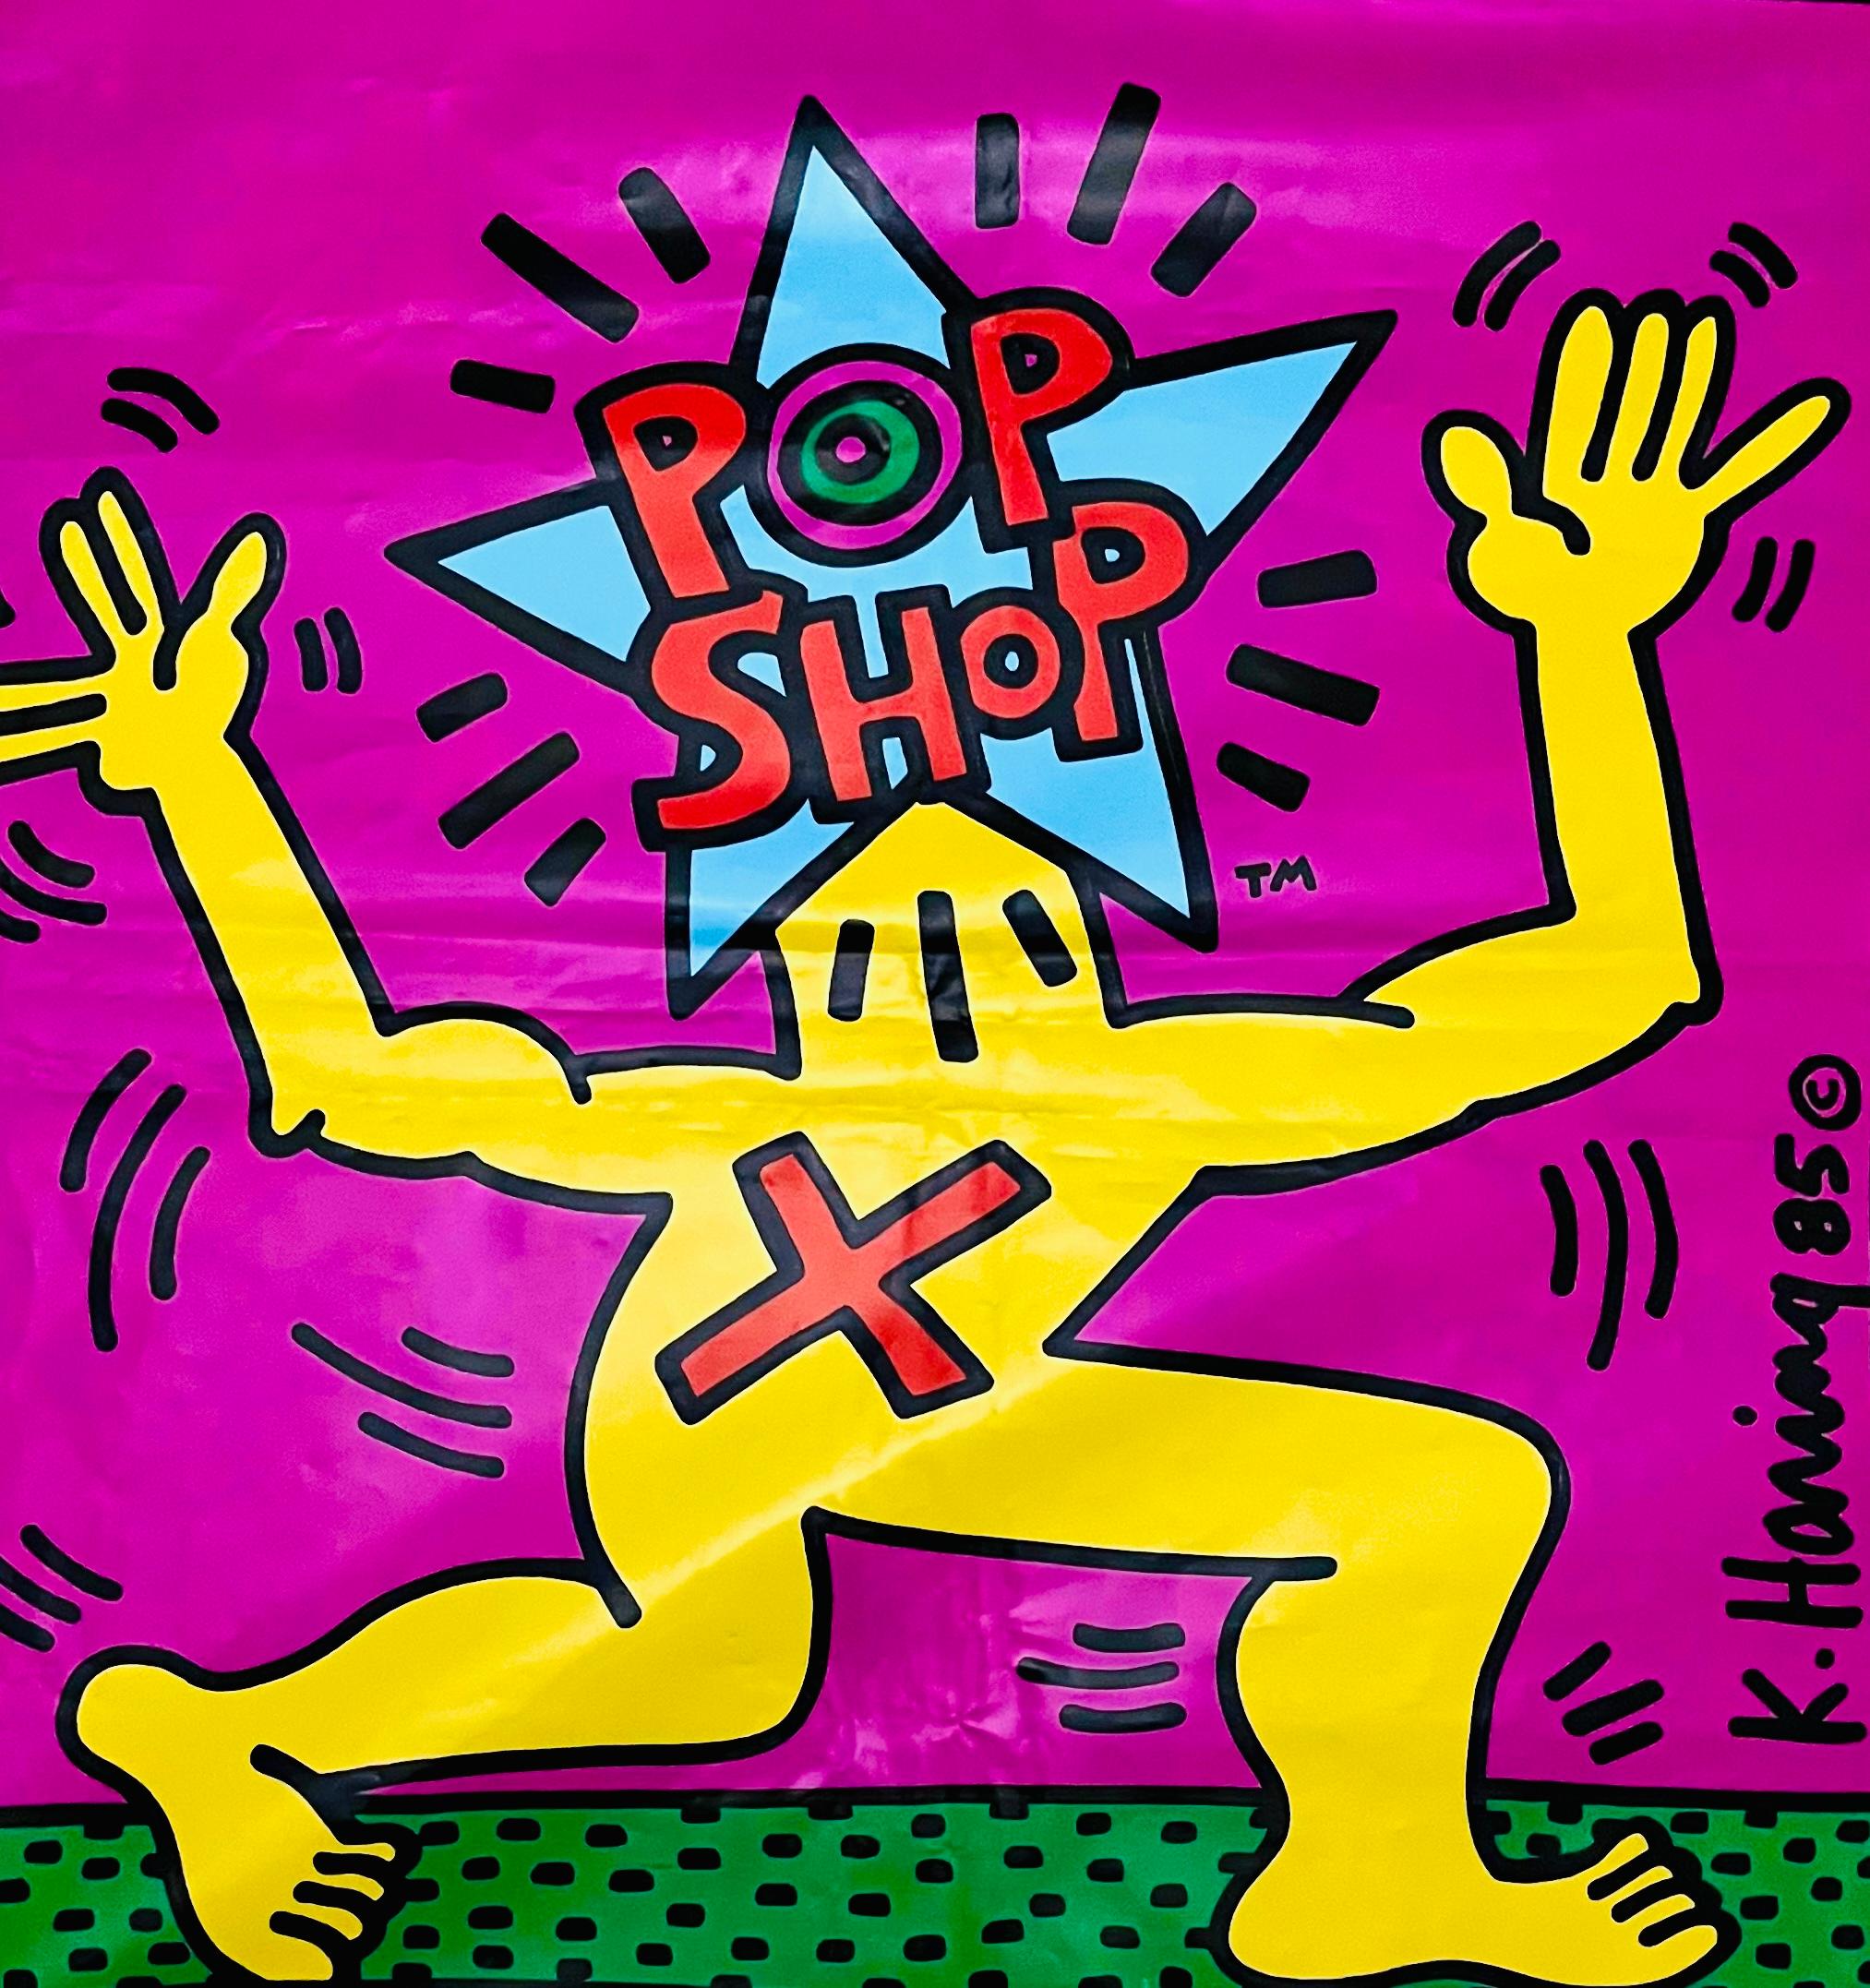 Original Keith Haring Pop Shop Bag aus den 1980er Jahren (Keith Haring Pop Shop Shop, New York)